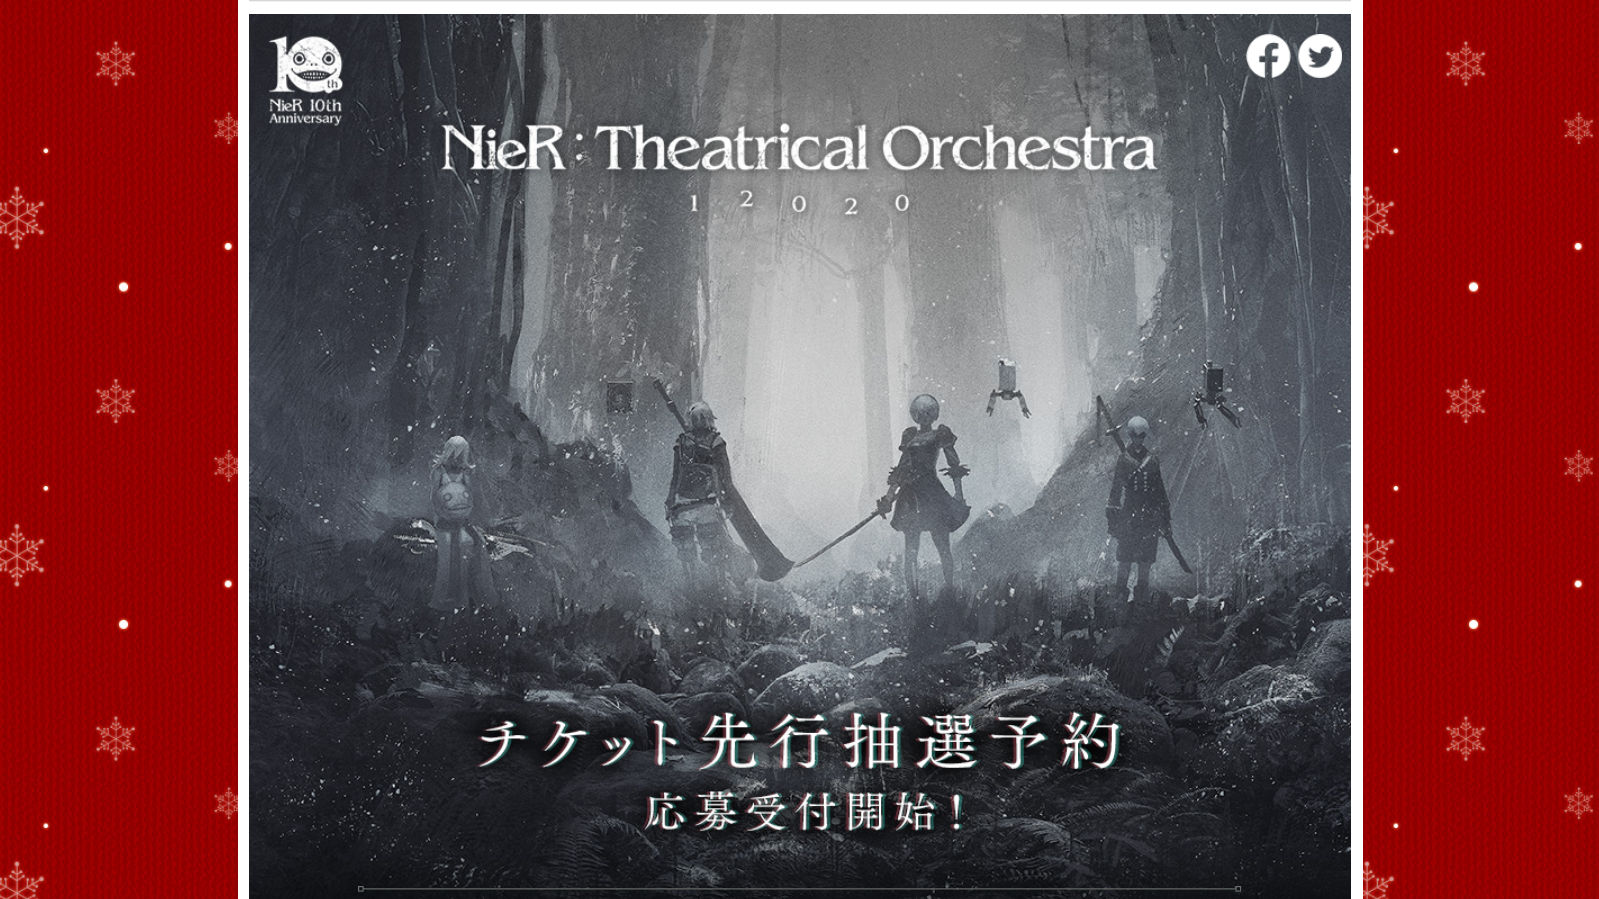 「NieR」シリーズ10周年記念コンサートが2020年に東京・大阪で開催決定。Amazon Musicでのシリーズ楽曲先行配信も開始_001